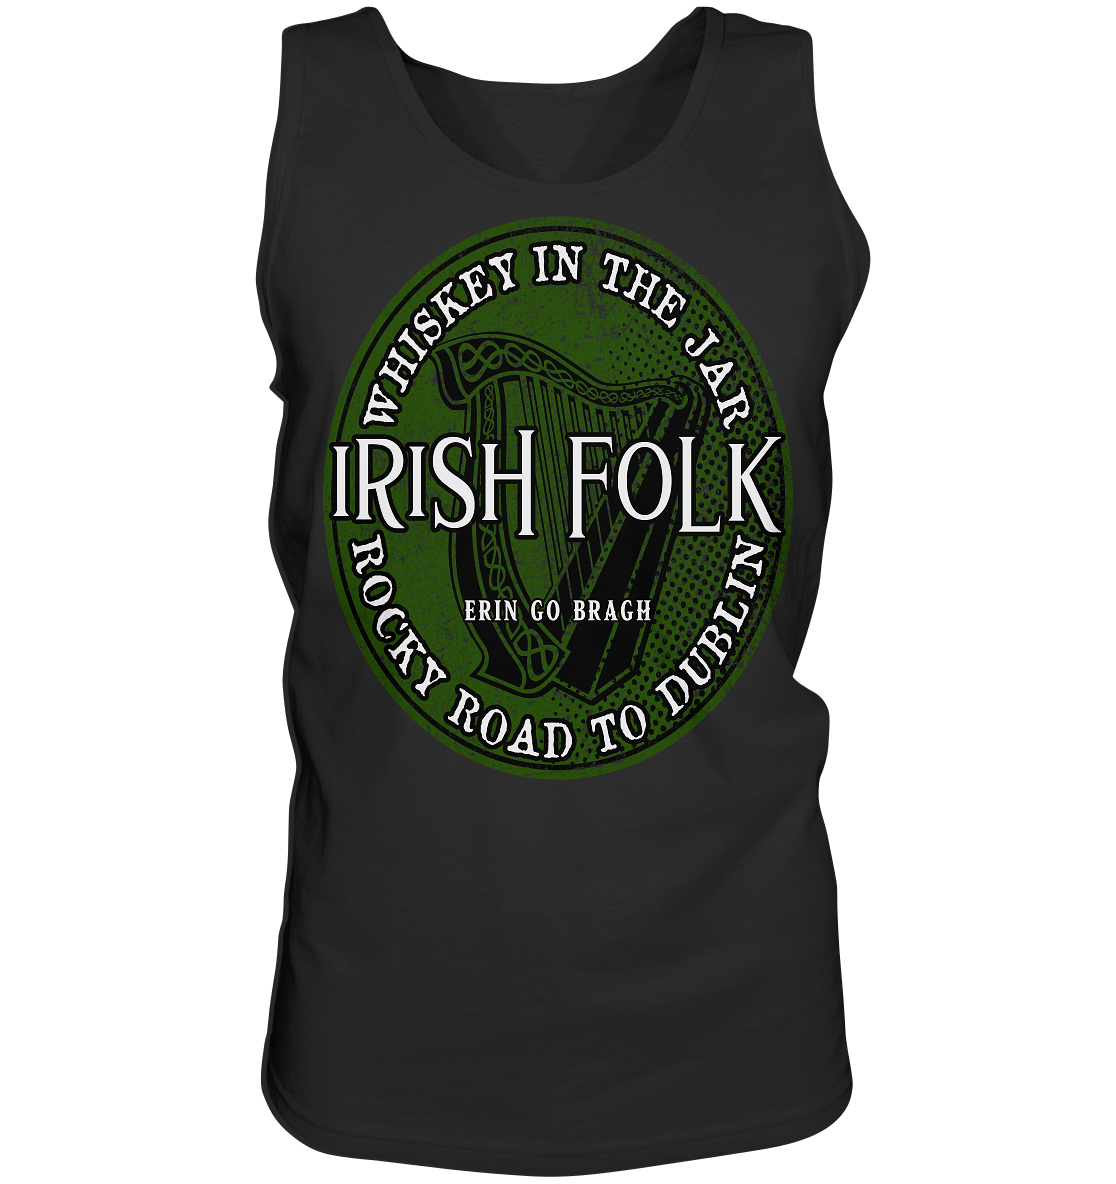 Irish Folk "Erin Go Bragh" - Tank-Top